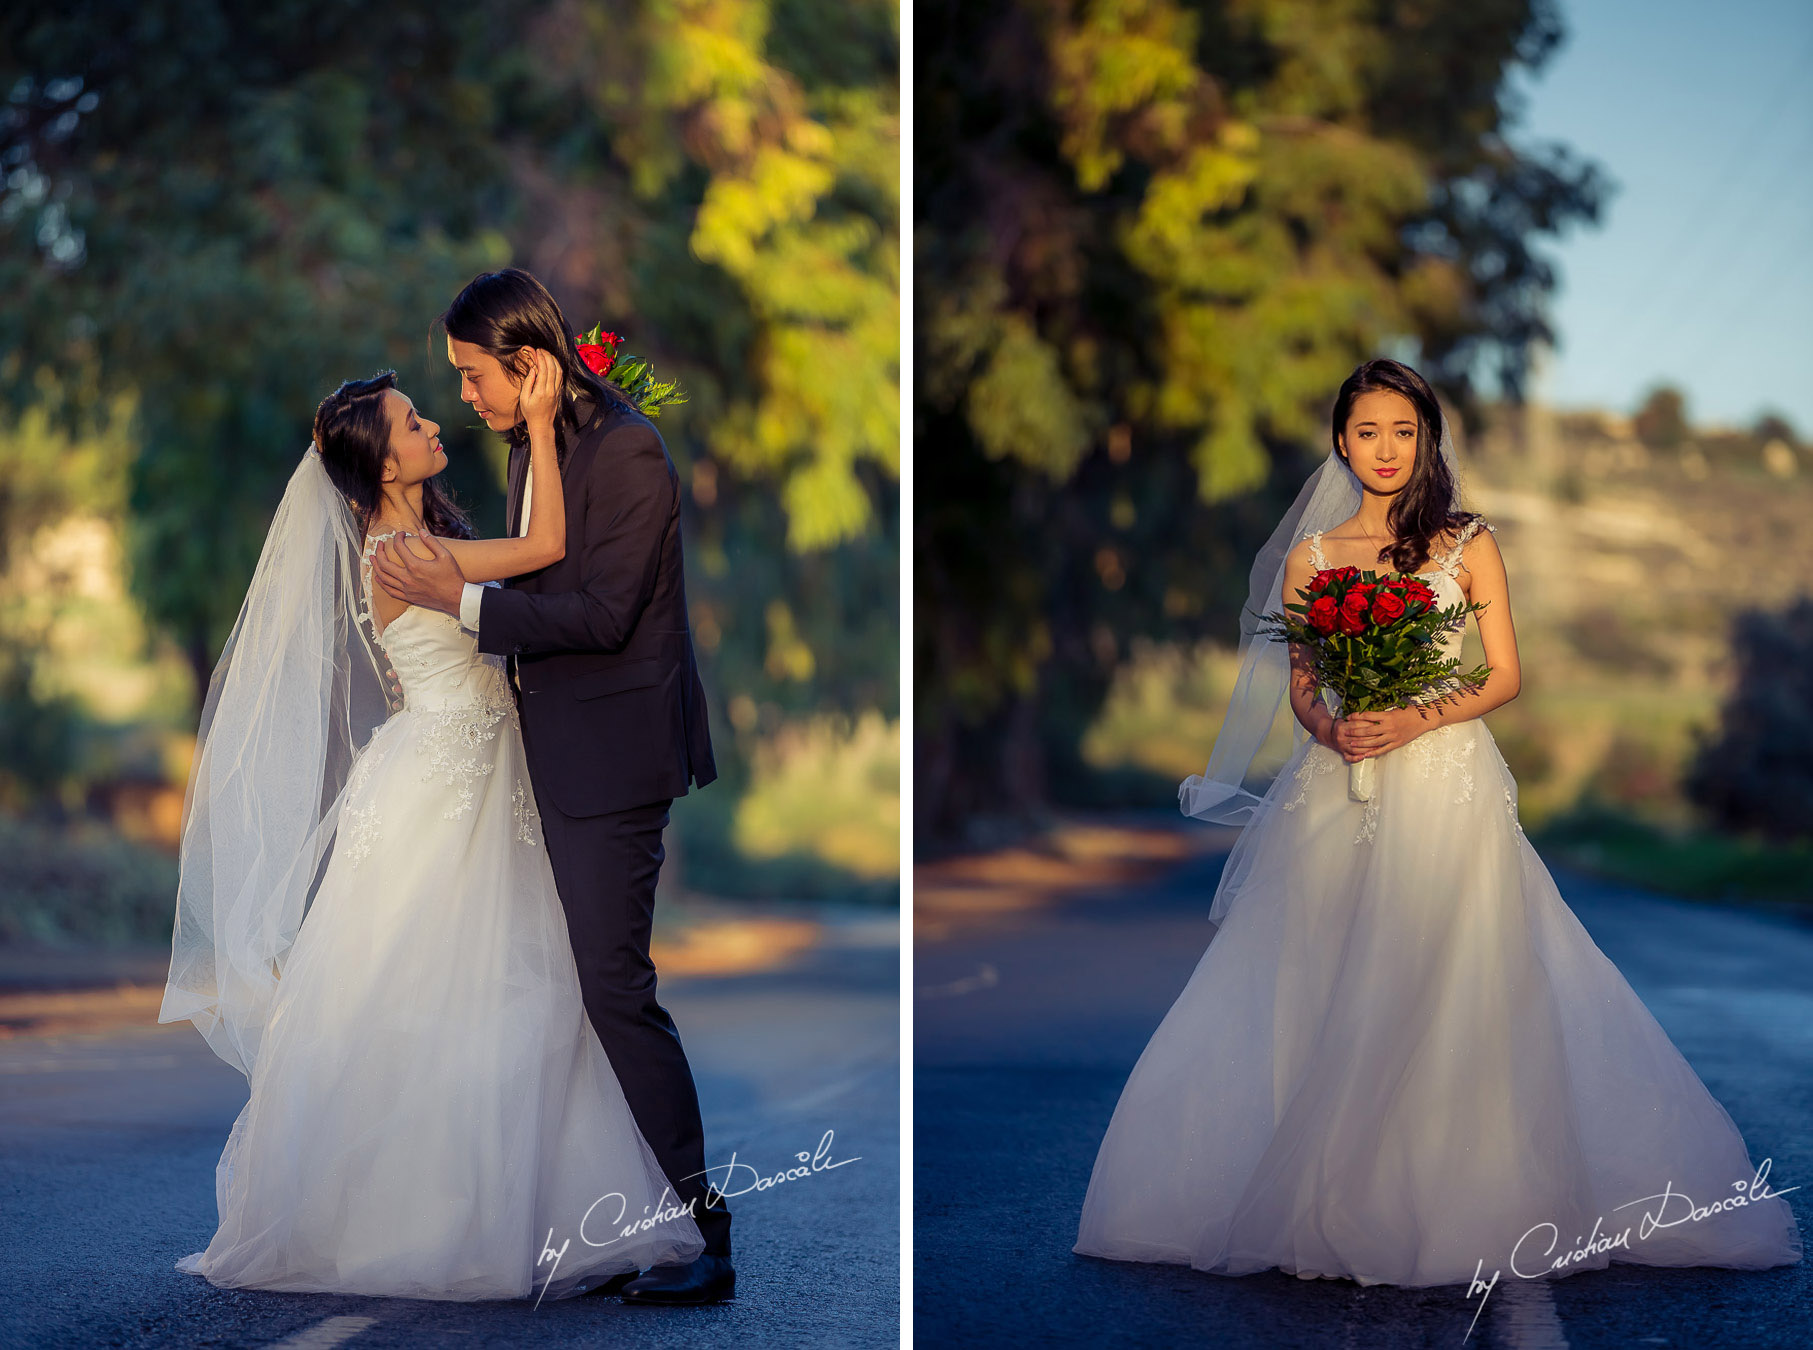 Pre Wedding Photoshoot in Cyprus - 09